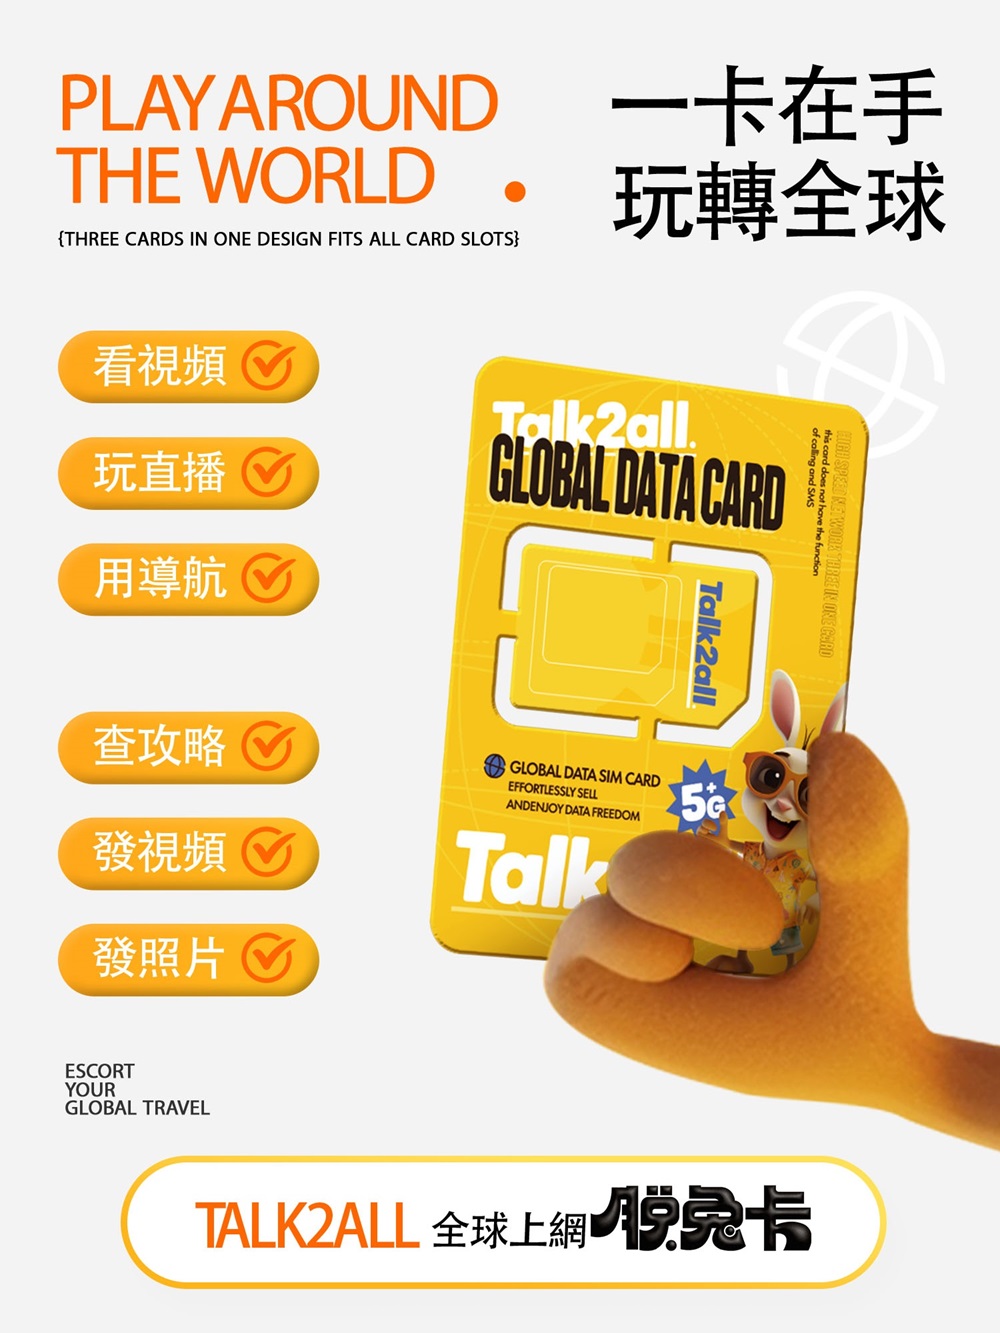 Talk2all脫兔卡 日本上網卡4天每日1GB高速網路過量